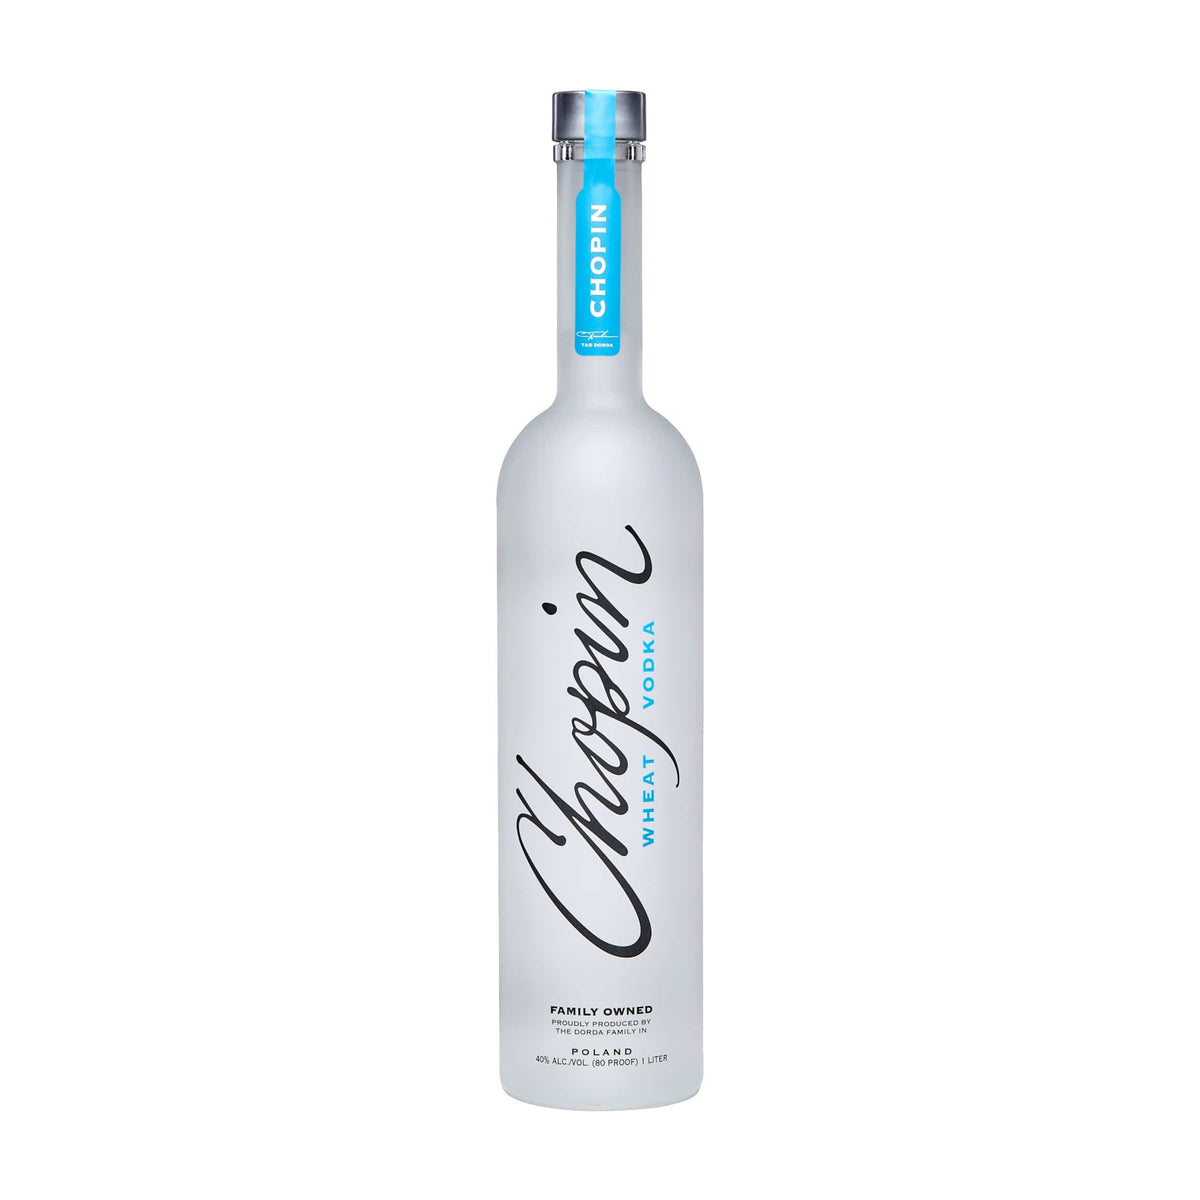 Chopin Wheat Vodka - Barbank